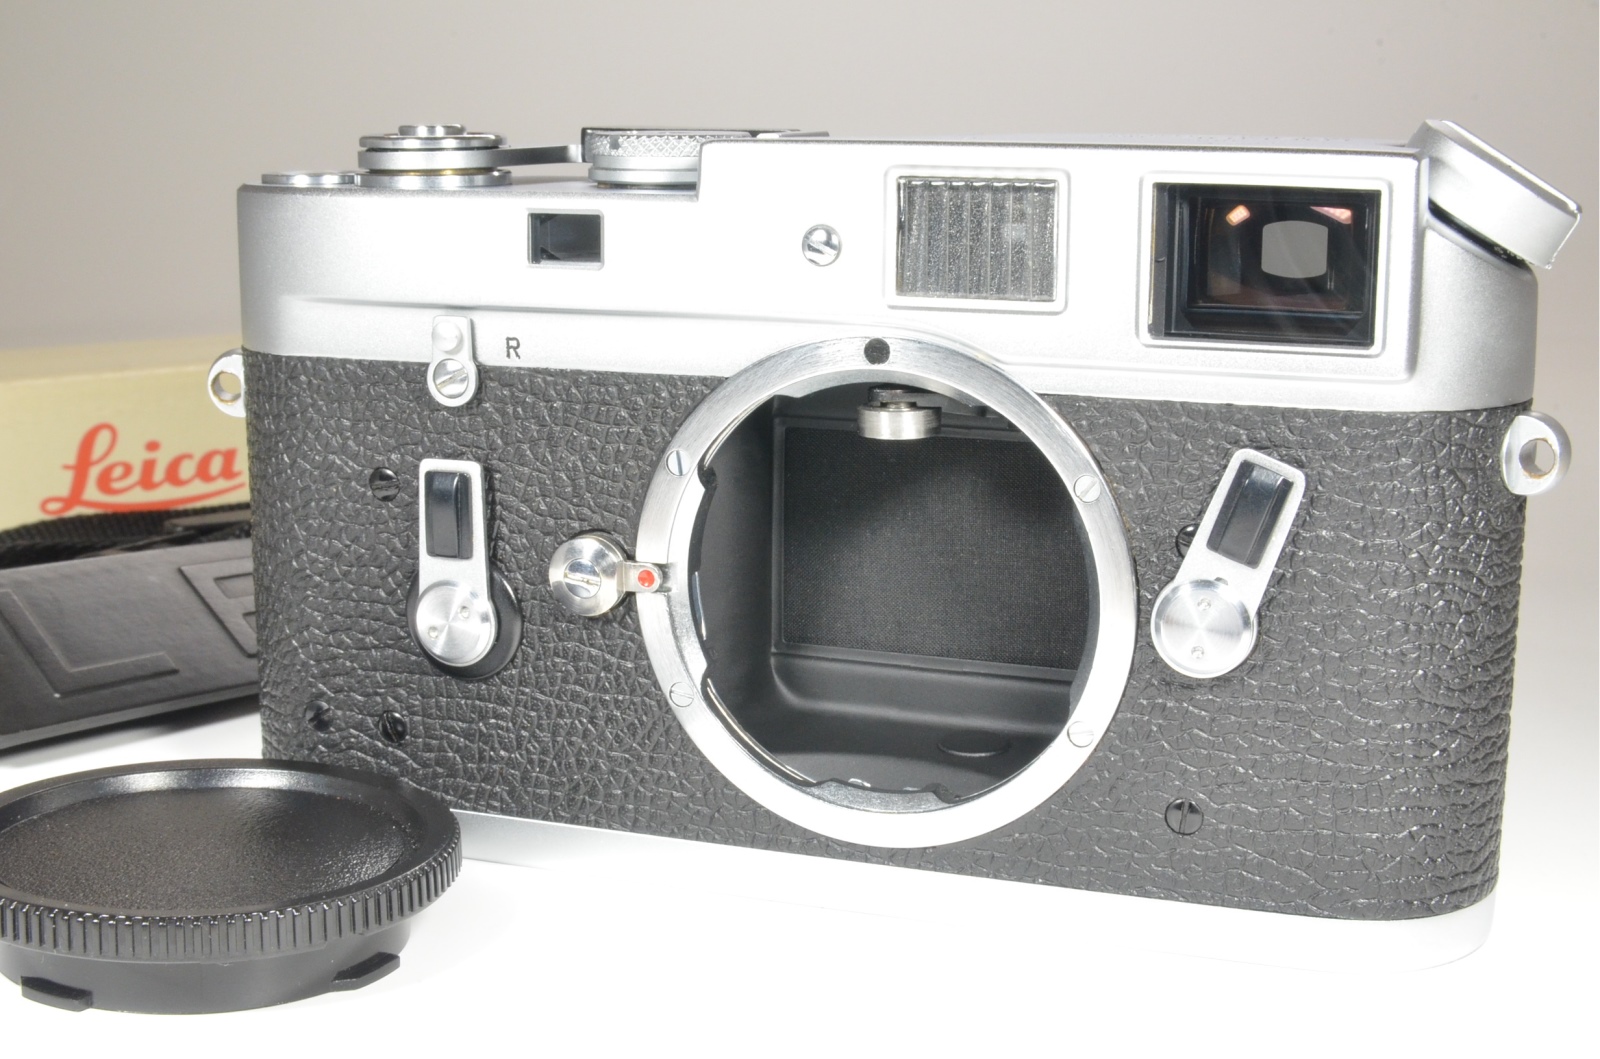 leica m4 35mm rangefinder film camera s/n 1230551 year 1969 with strap